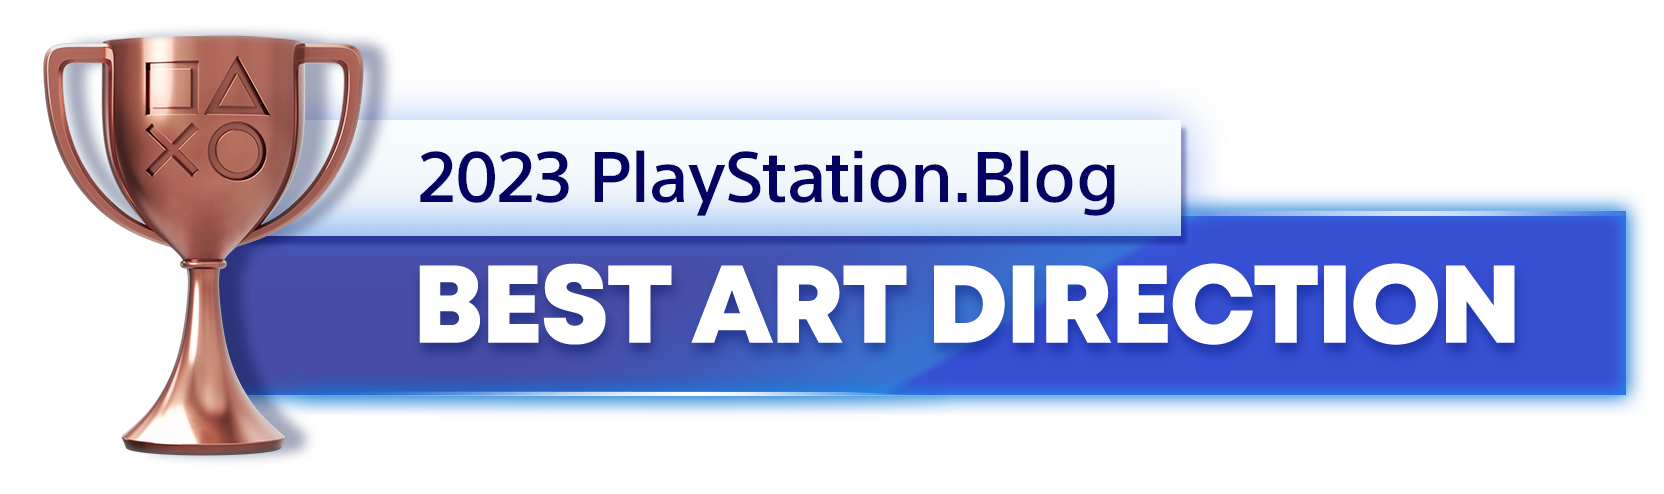  "Bronze Trophy for the 2023 PlayStation Blog Best Art Direction Winner"